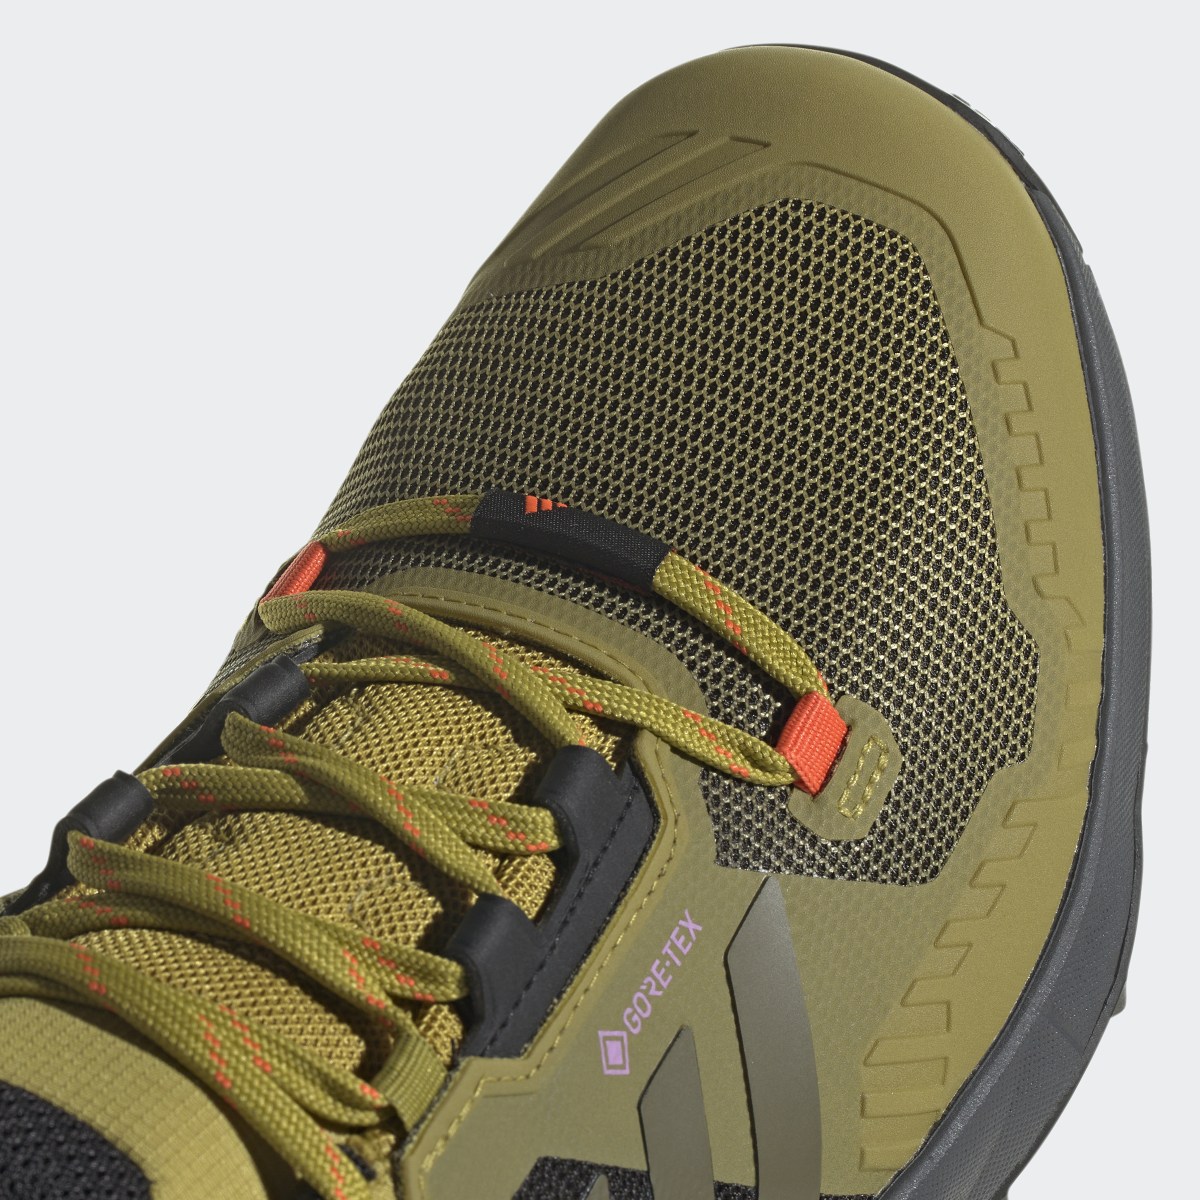 Adidas Terrex Swift R3 GORE-TEX Hiking Shoes. 9